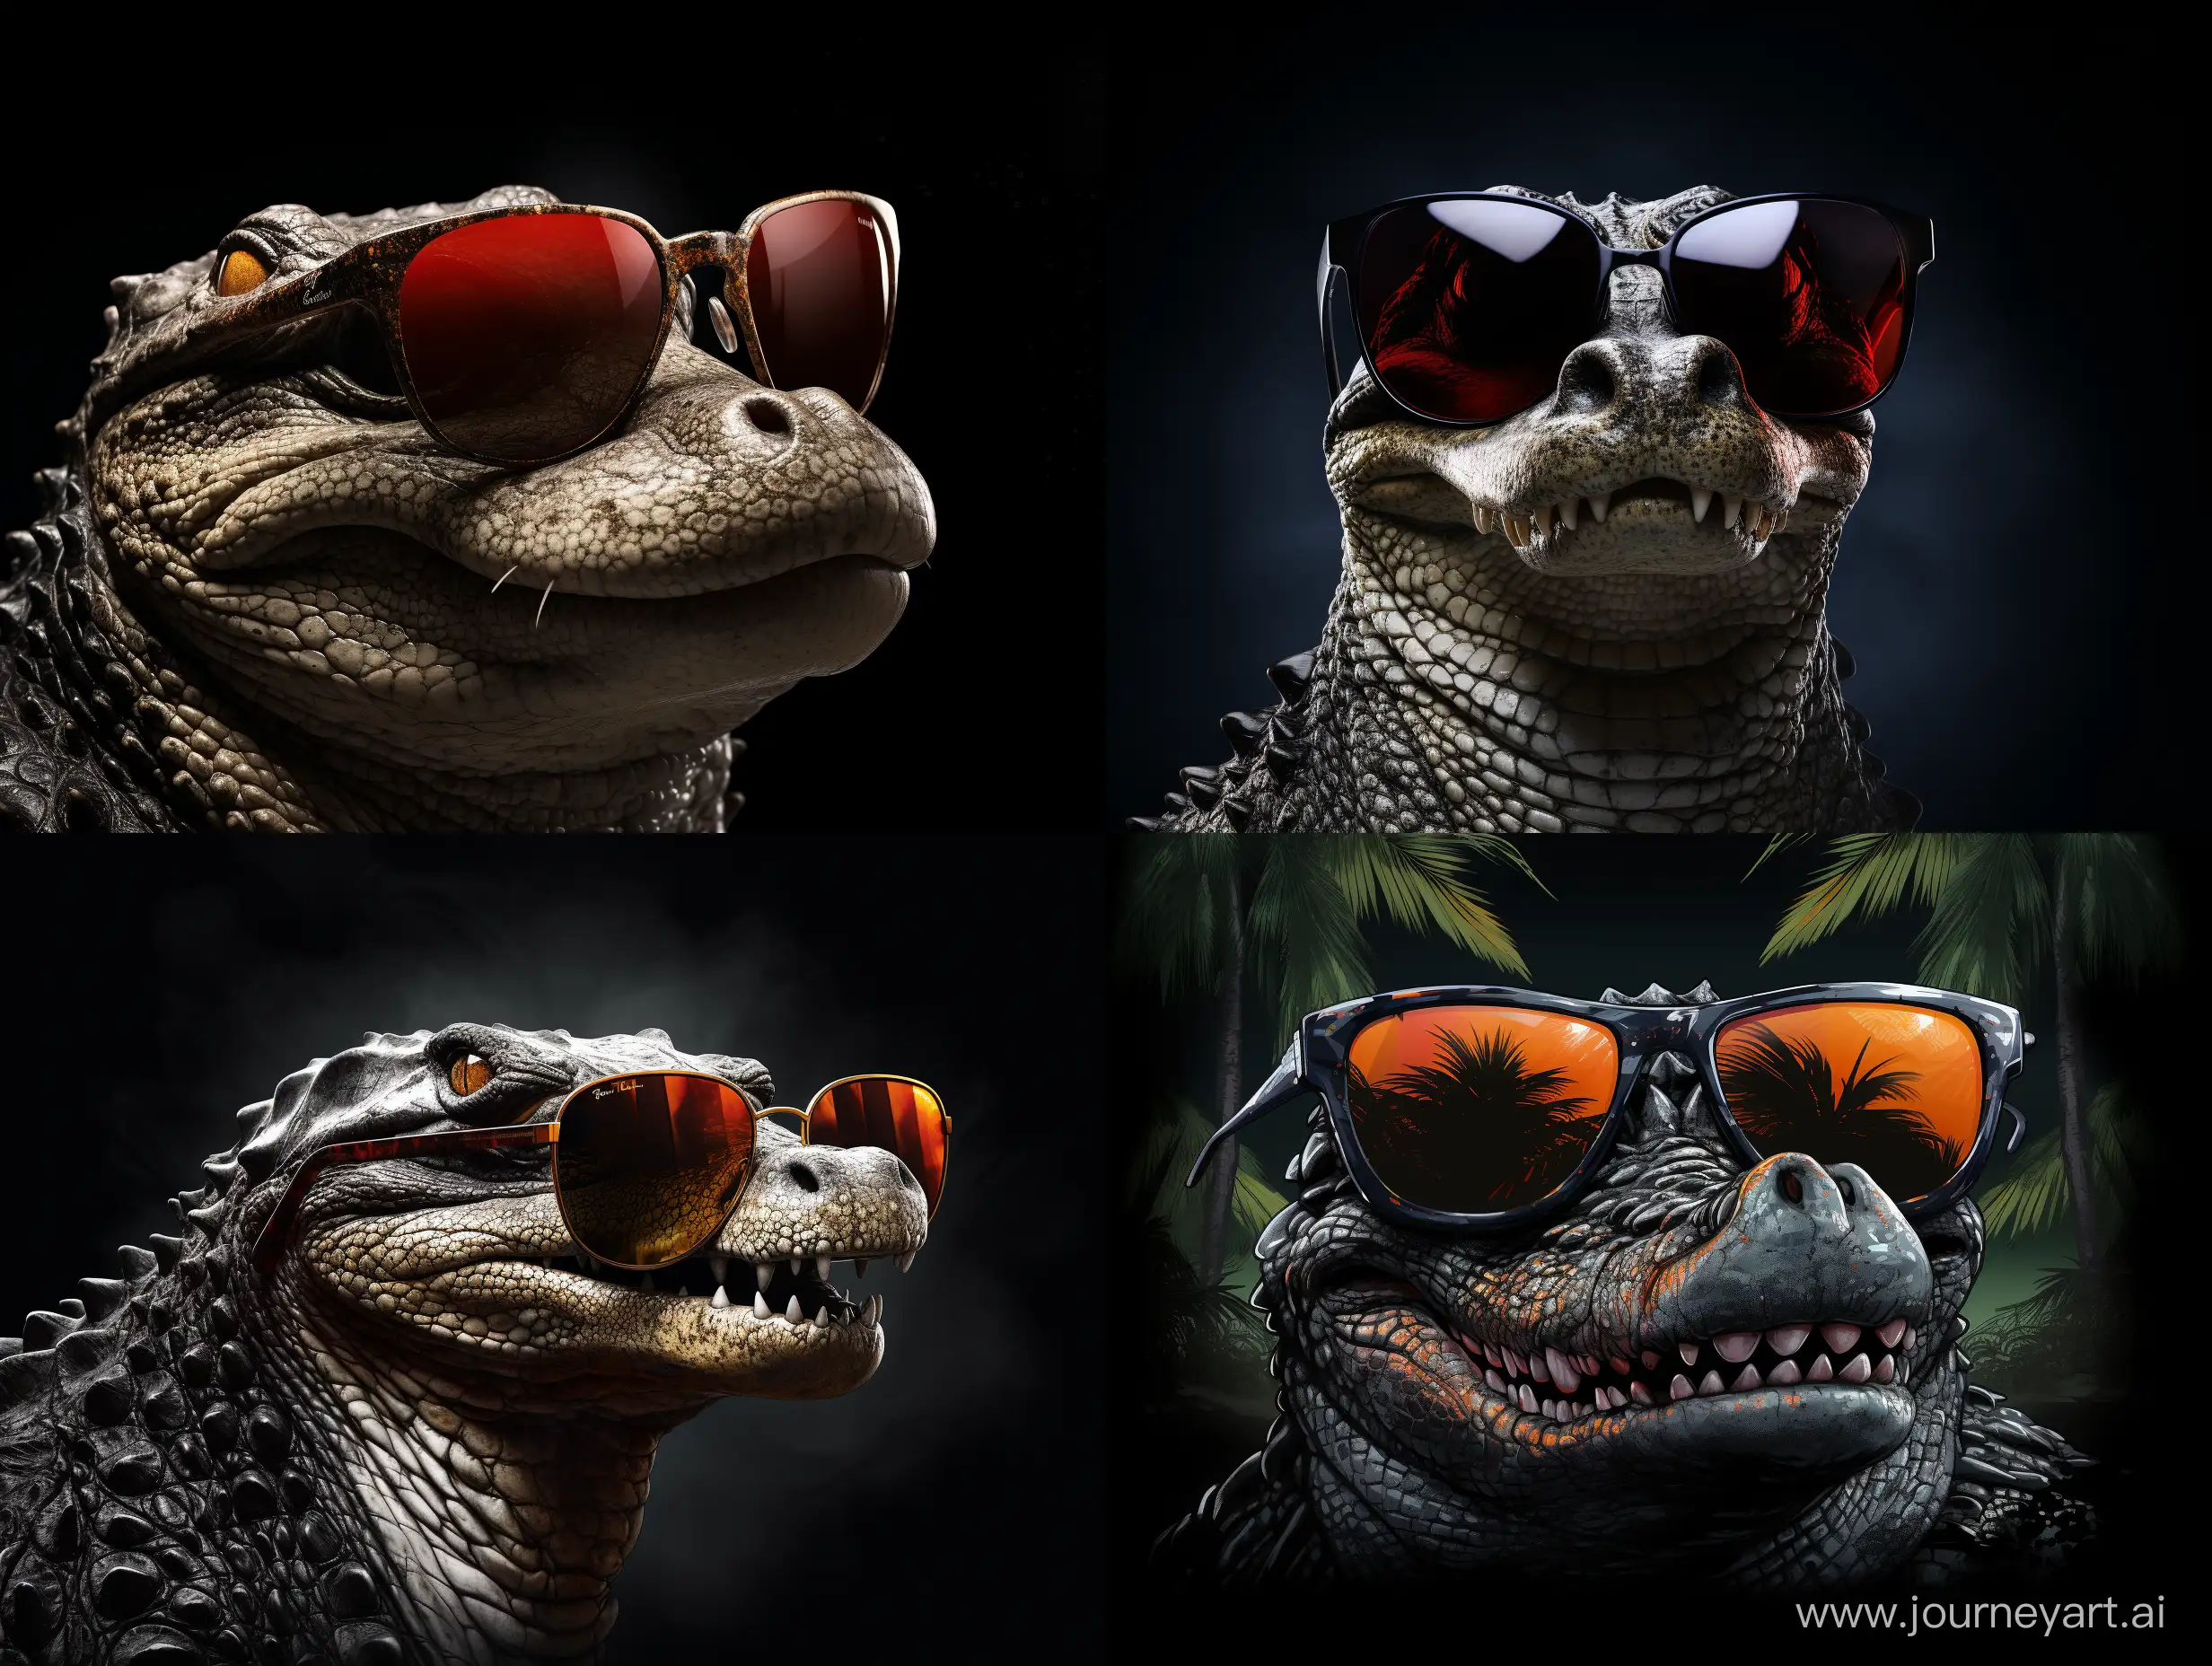 Sinister-Crocodile-Wearing-Sunglasses-on-Black-Background